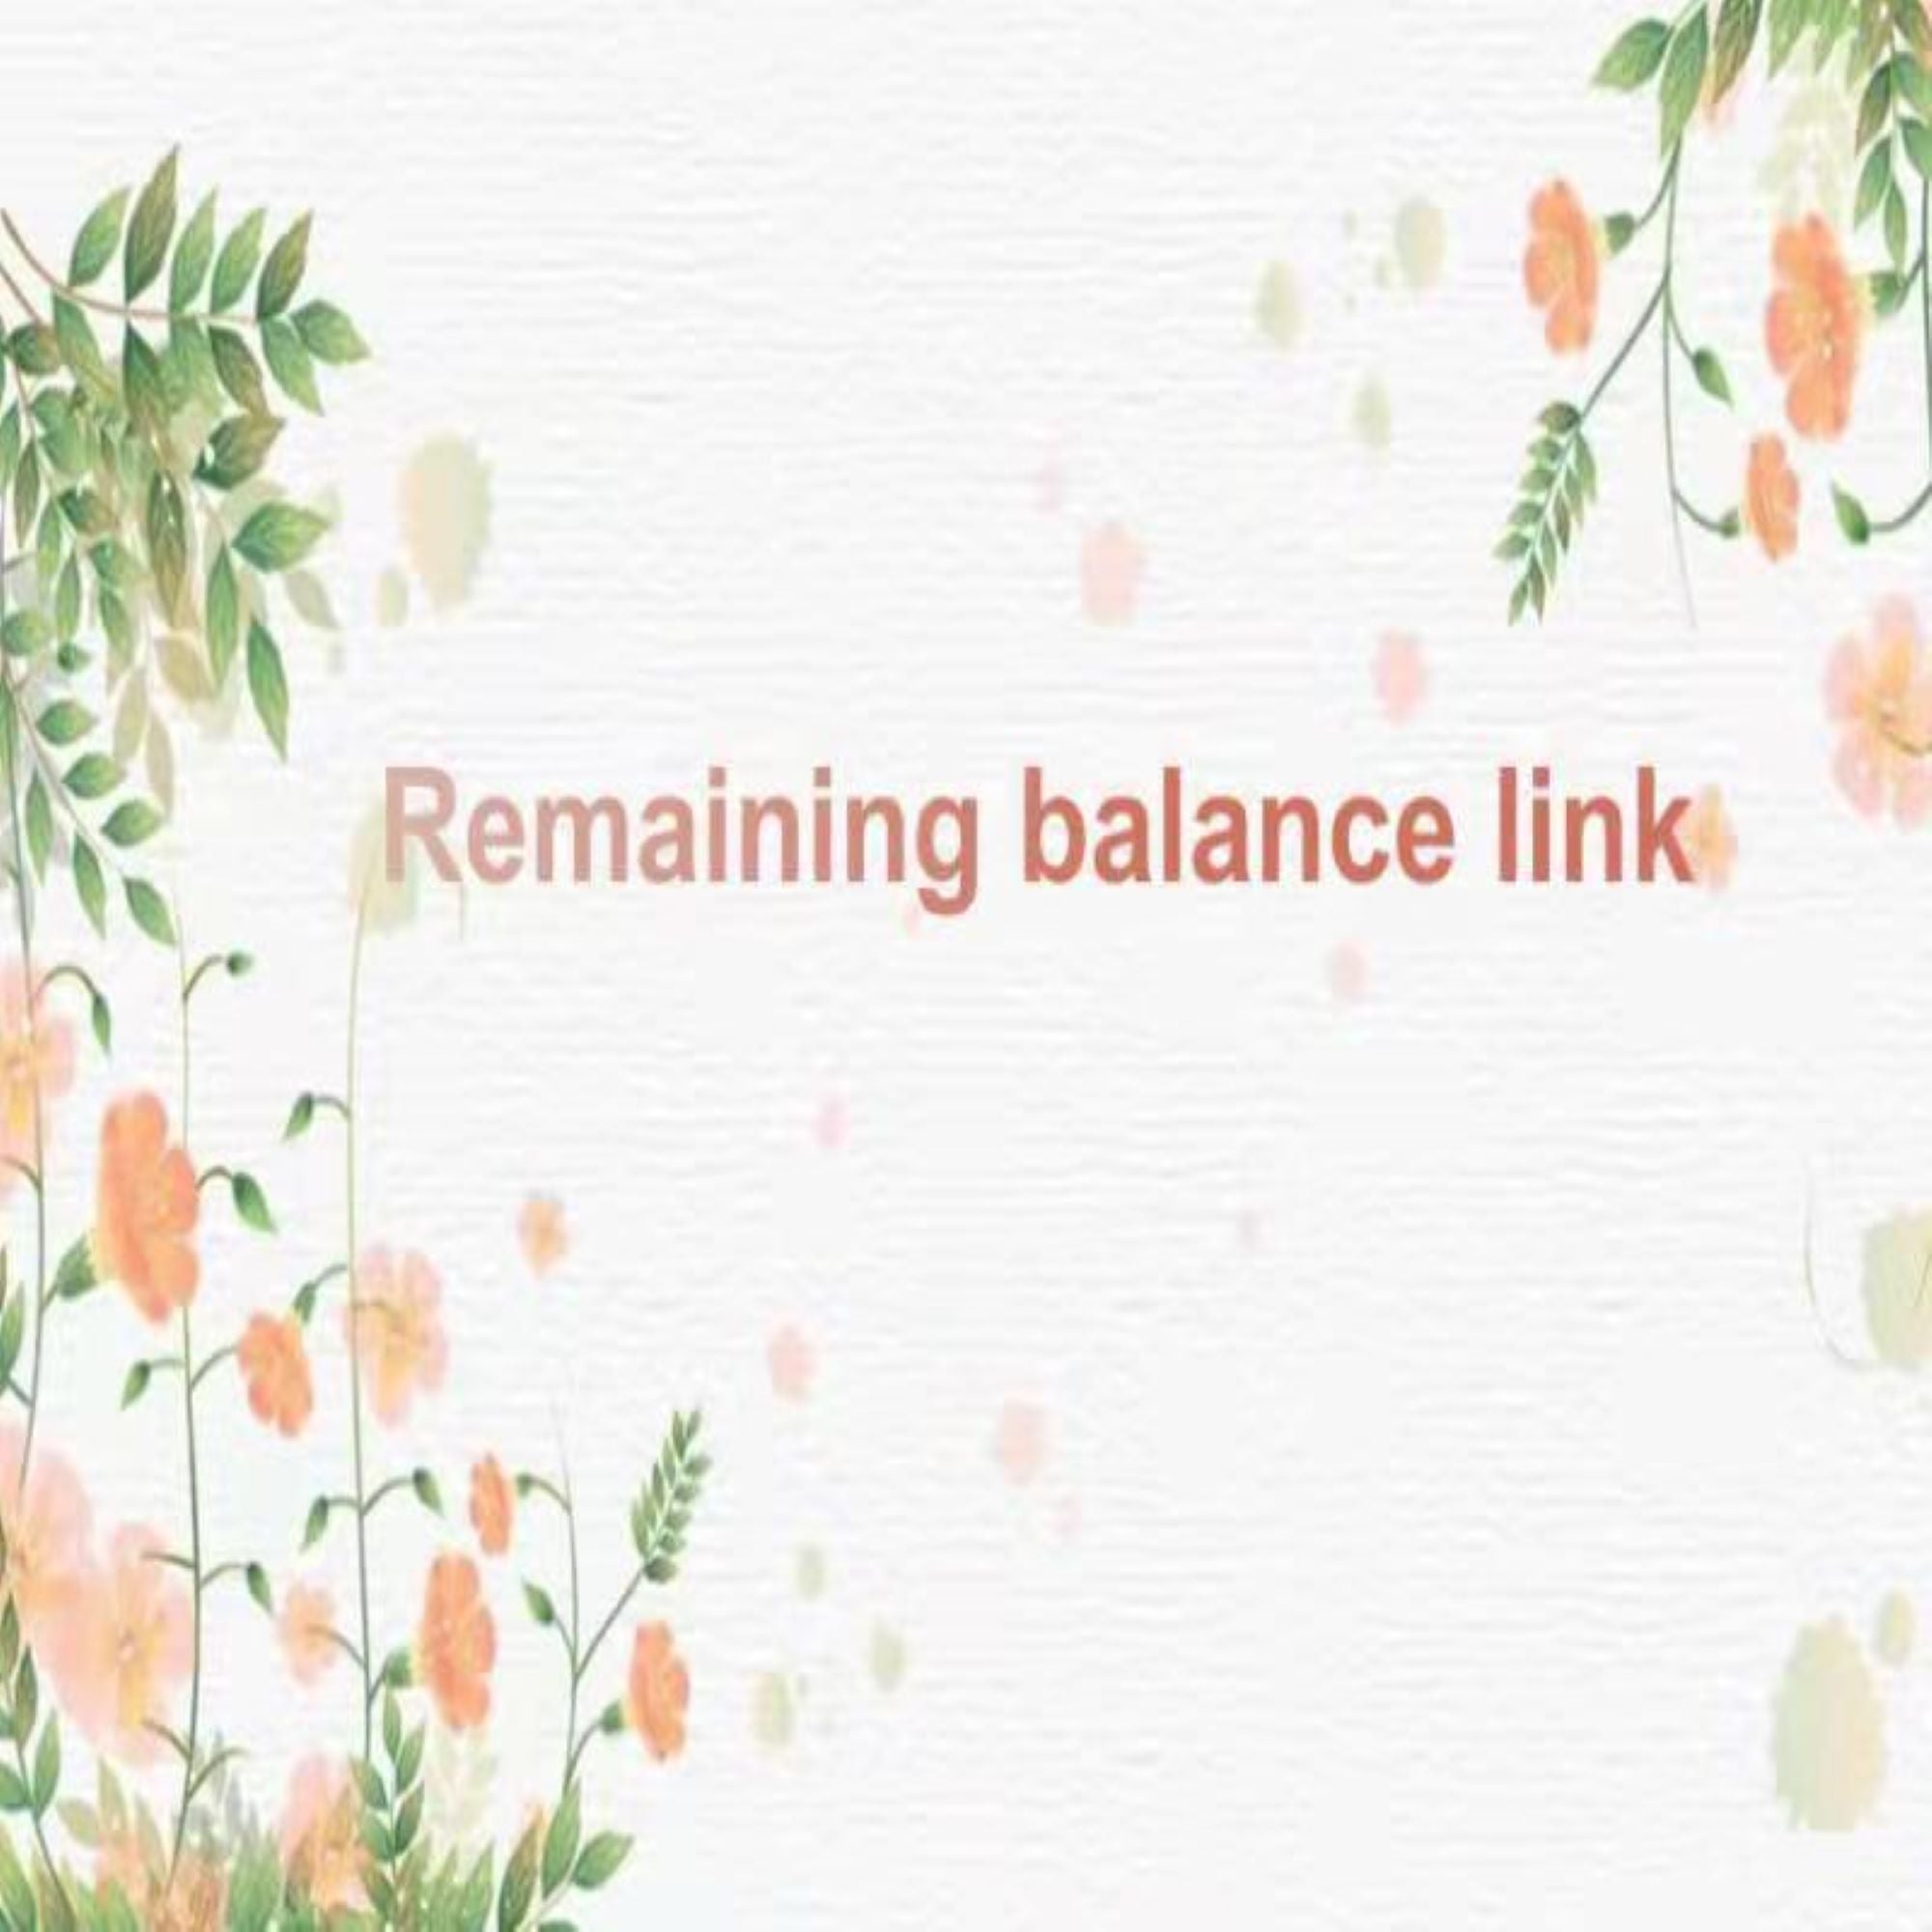 Remaining balance link